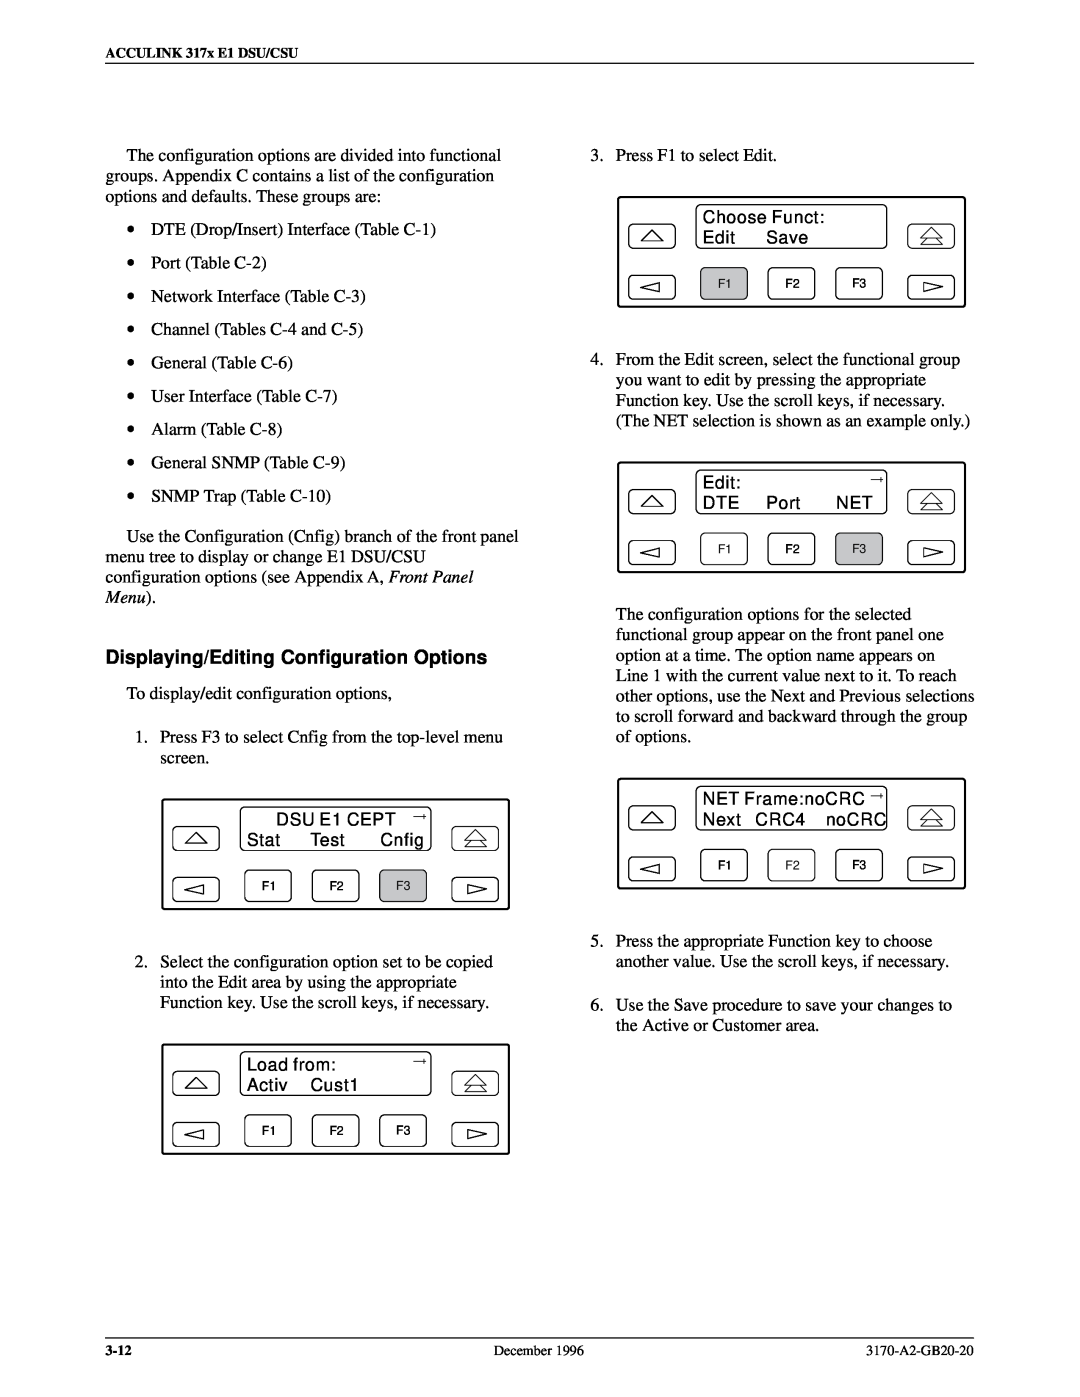 Paradyne 317x E1 manual Displaying/Editing Configuration Options 